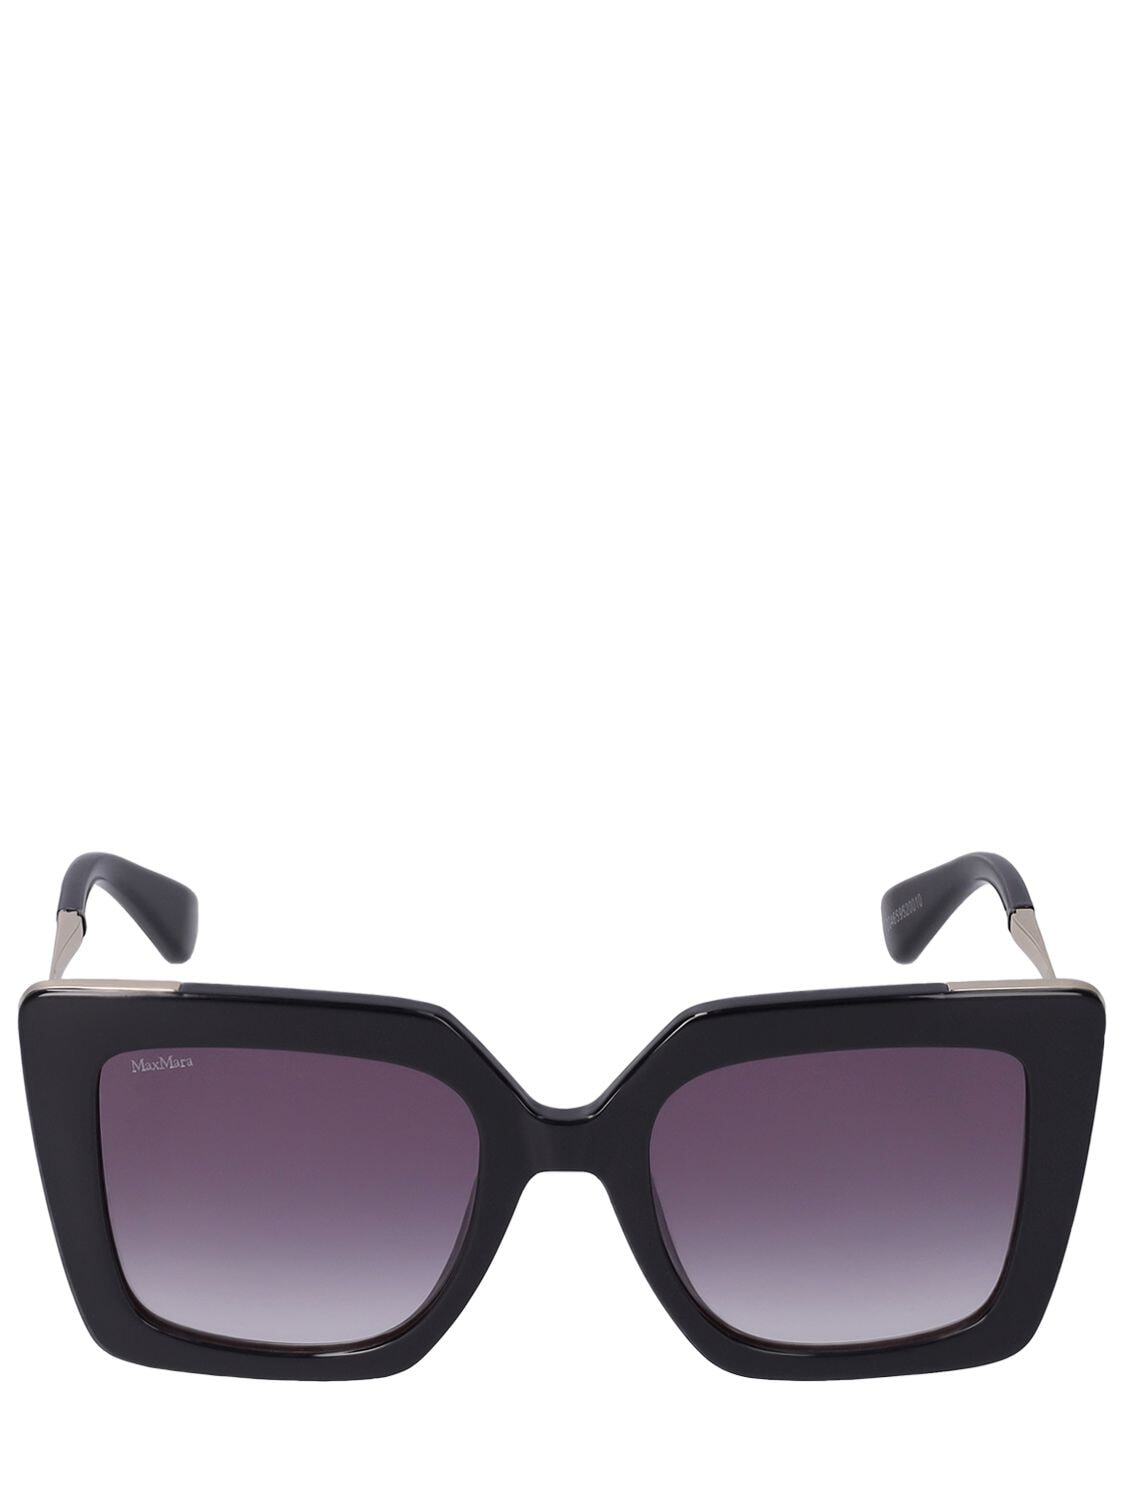 MAX MARA Design4 Butterfly Sunglasses in black